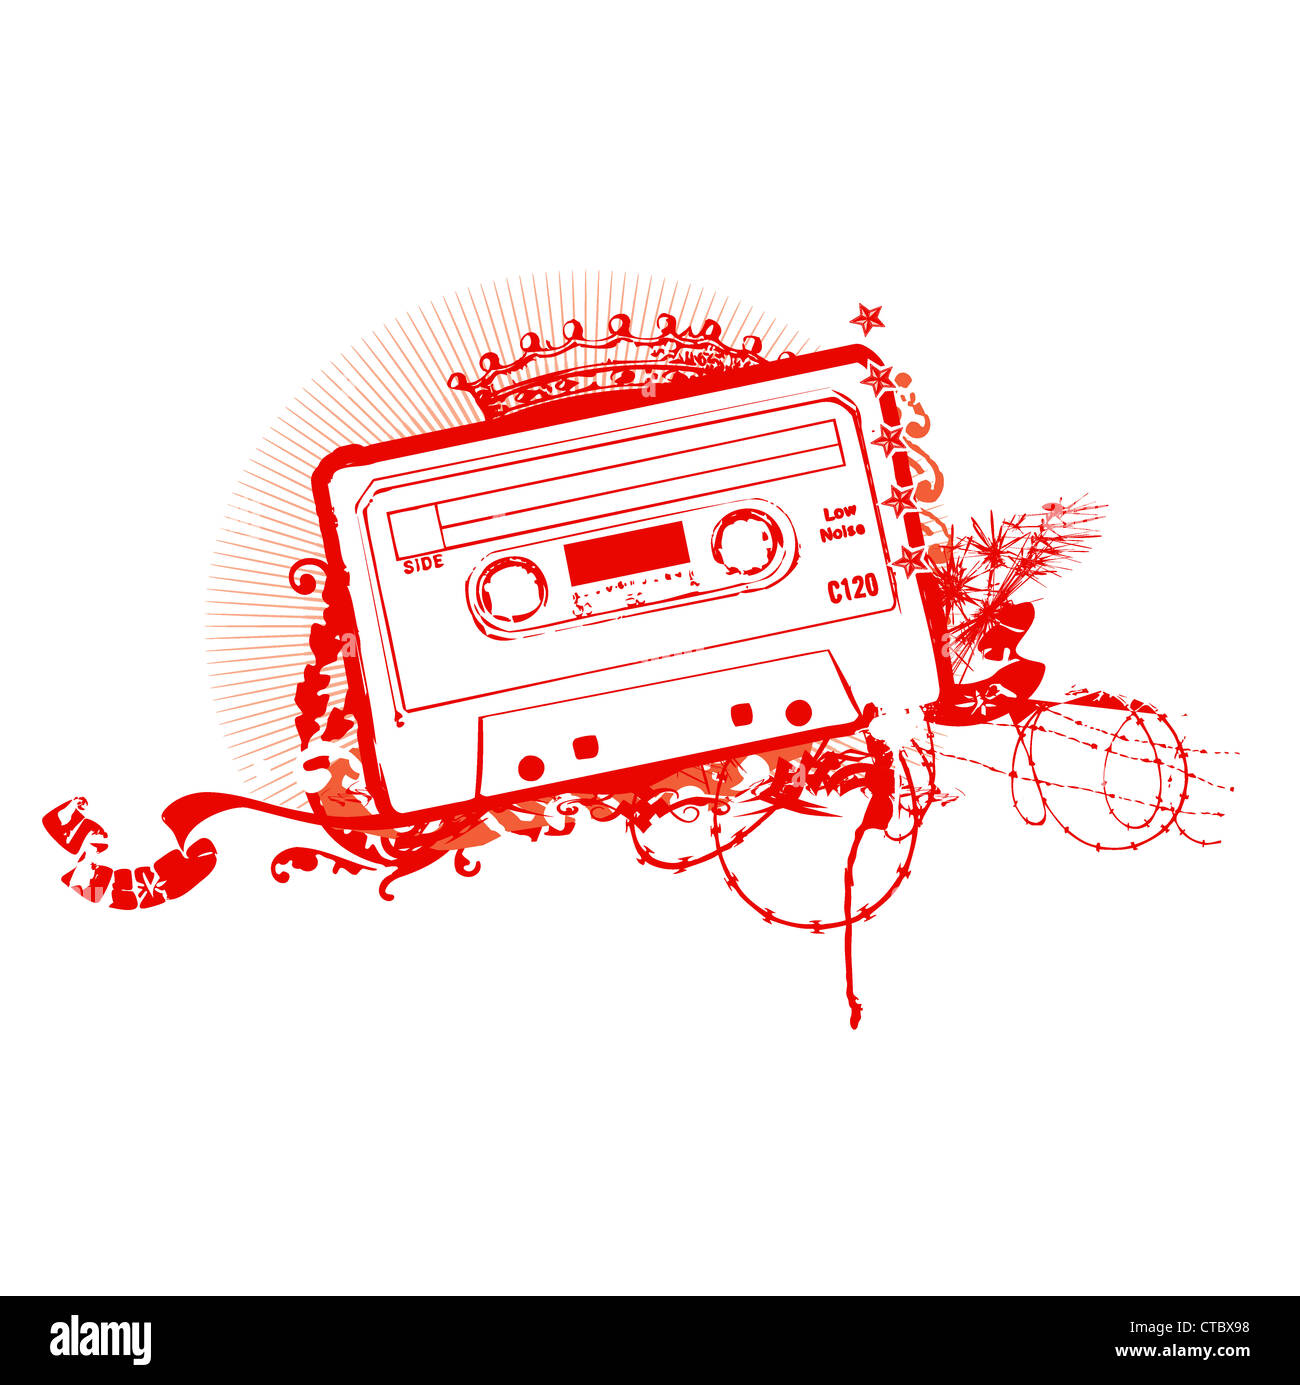 Cassette Tape Stencil . Vector illustration Stock Photo - Alamy